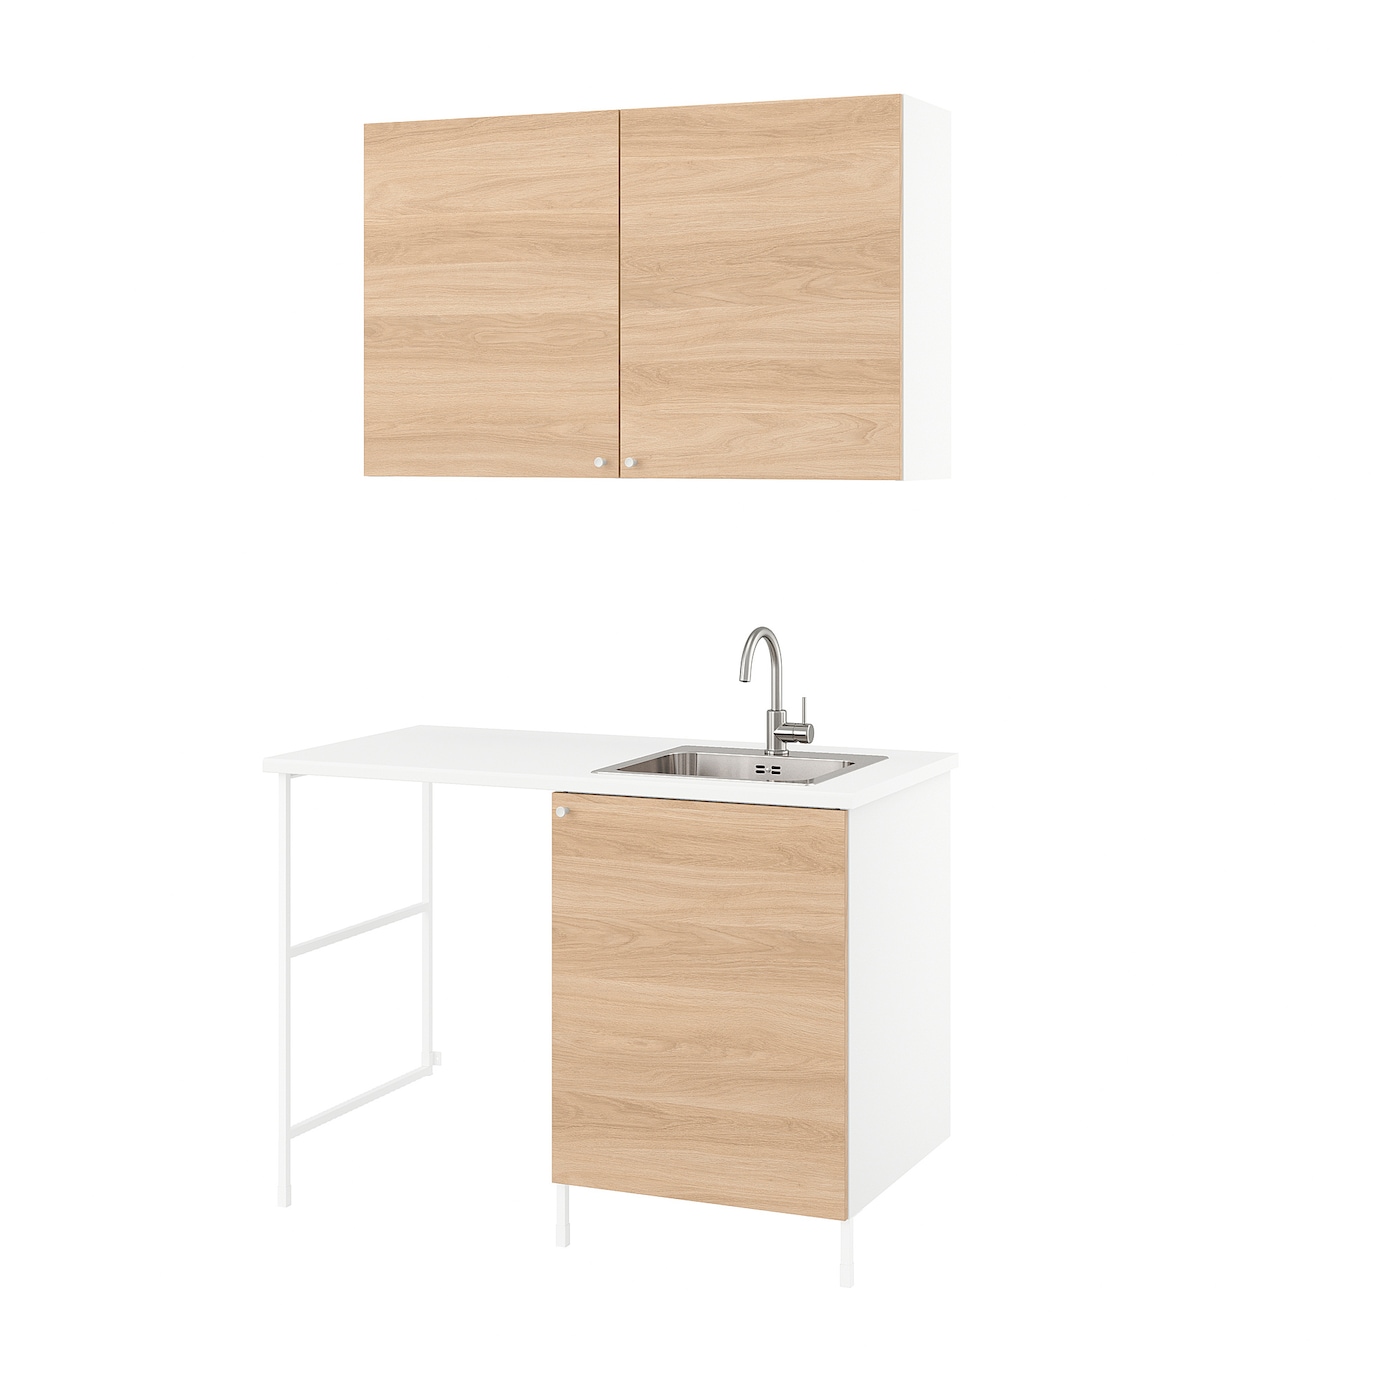 Комбинация для ванной - IKEA ENHET, 139х63.5х87.5 см, белый/имитация дуба, ЭНХЕТ ИКЕА